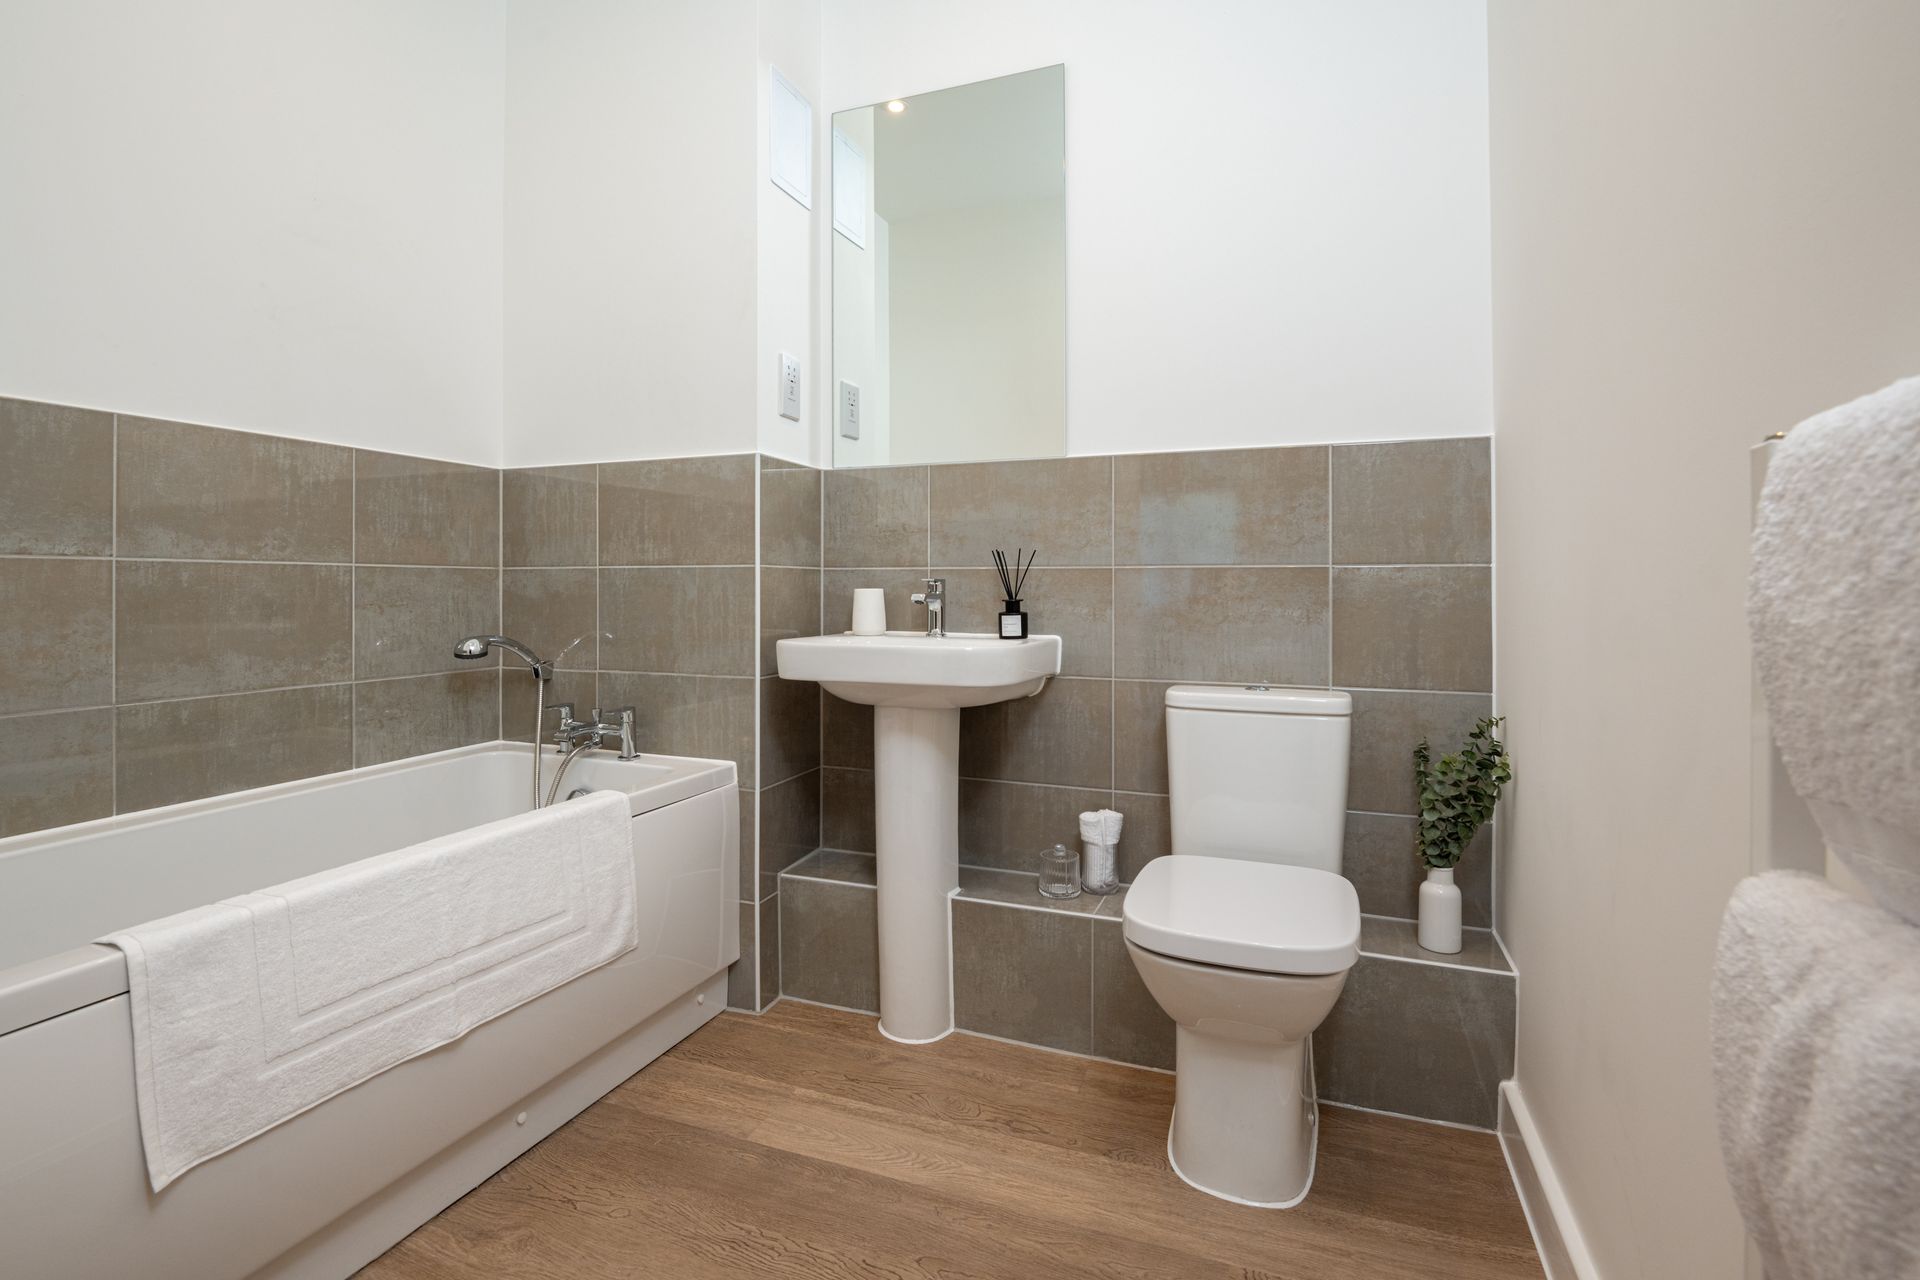 A bathroom with a sink , toilet , bathtub and mirror at Walton Court.